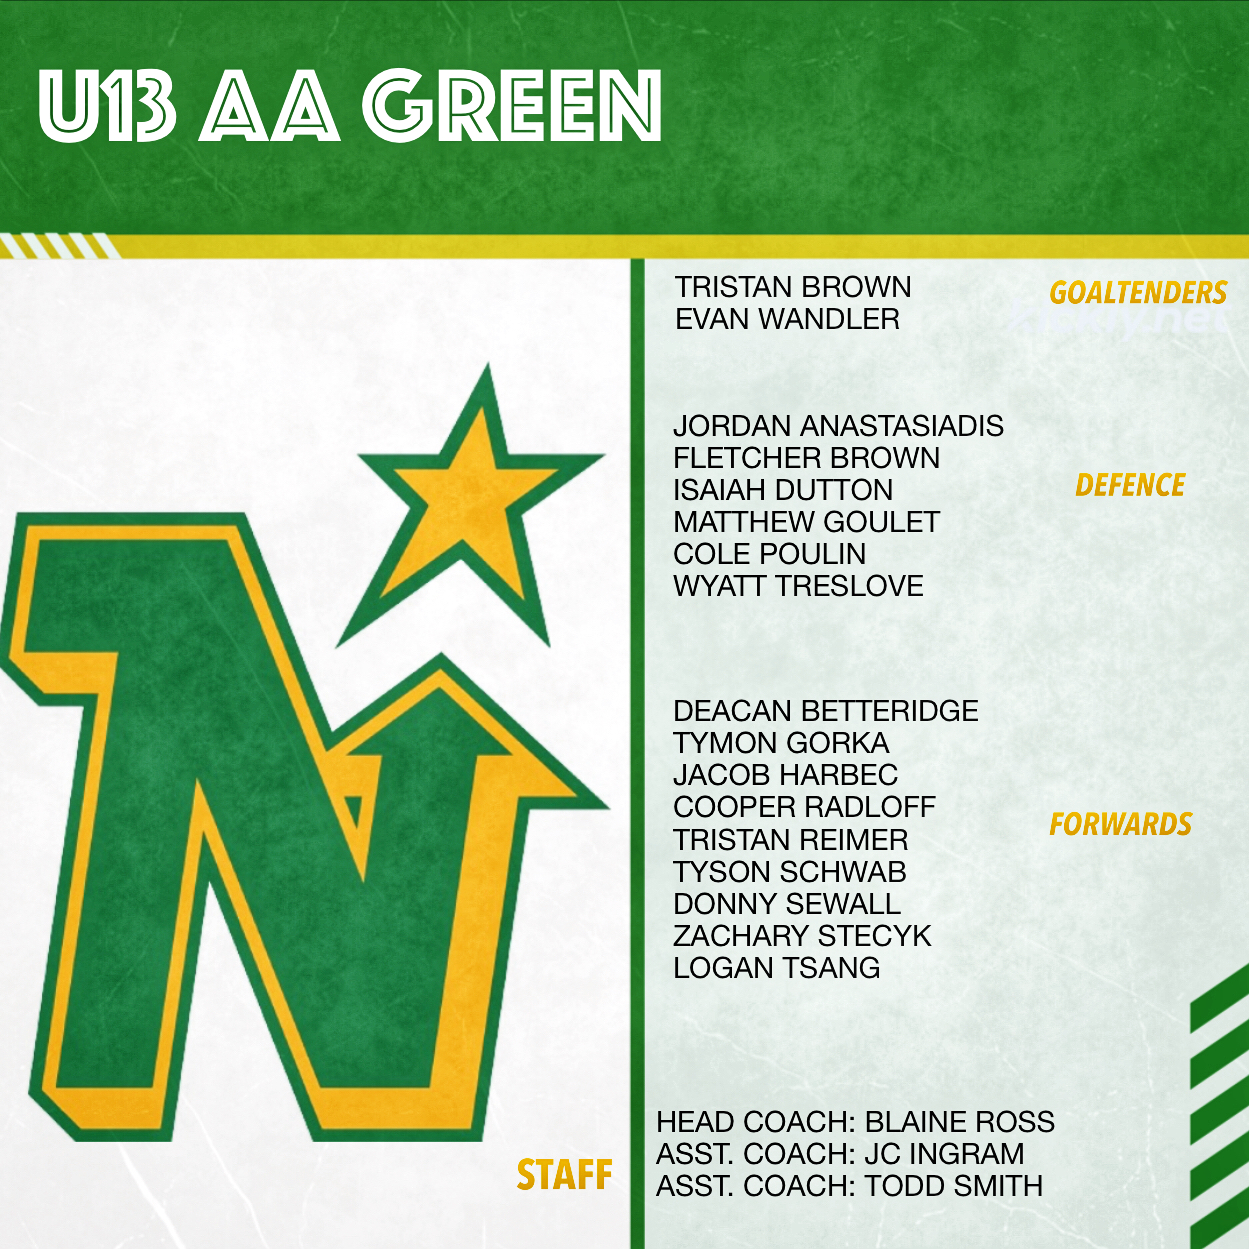 U13 AA Green